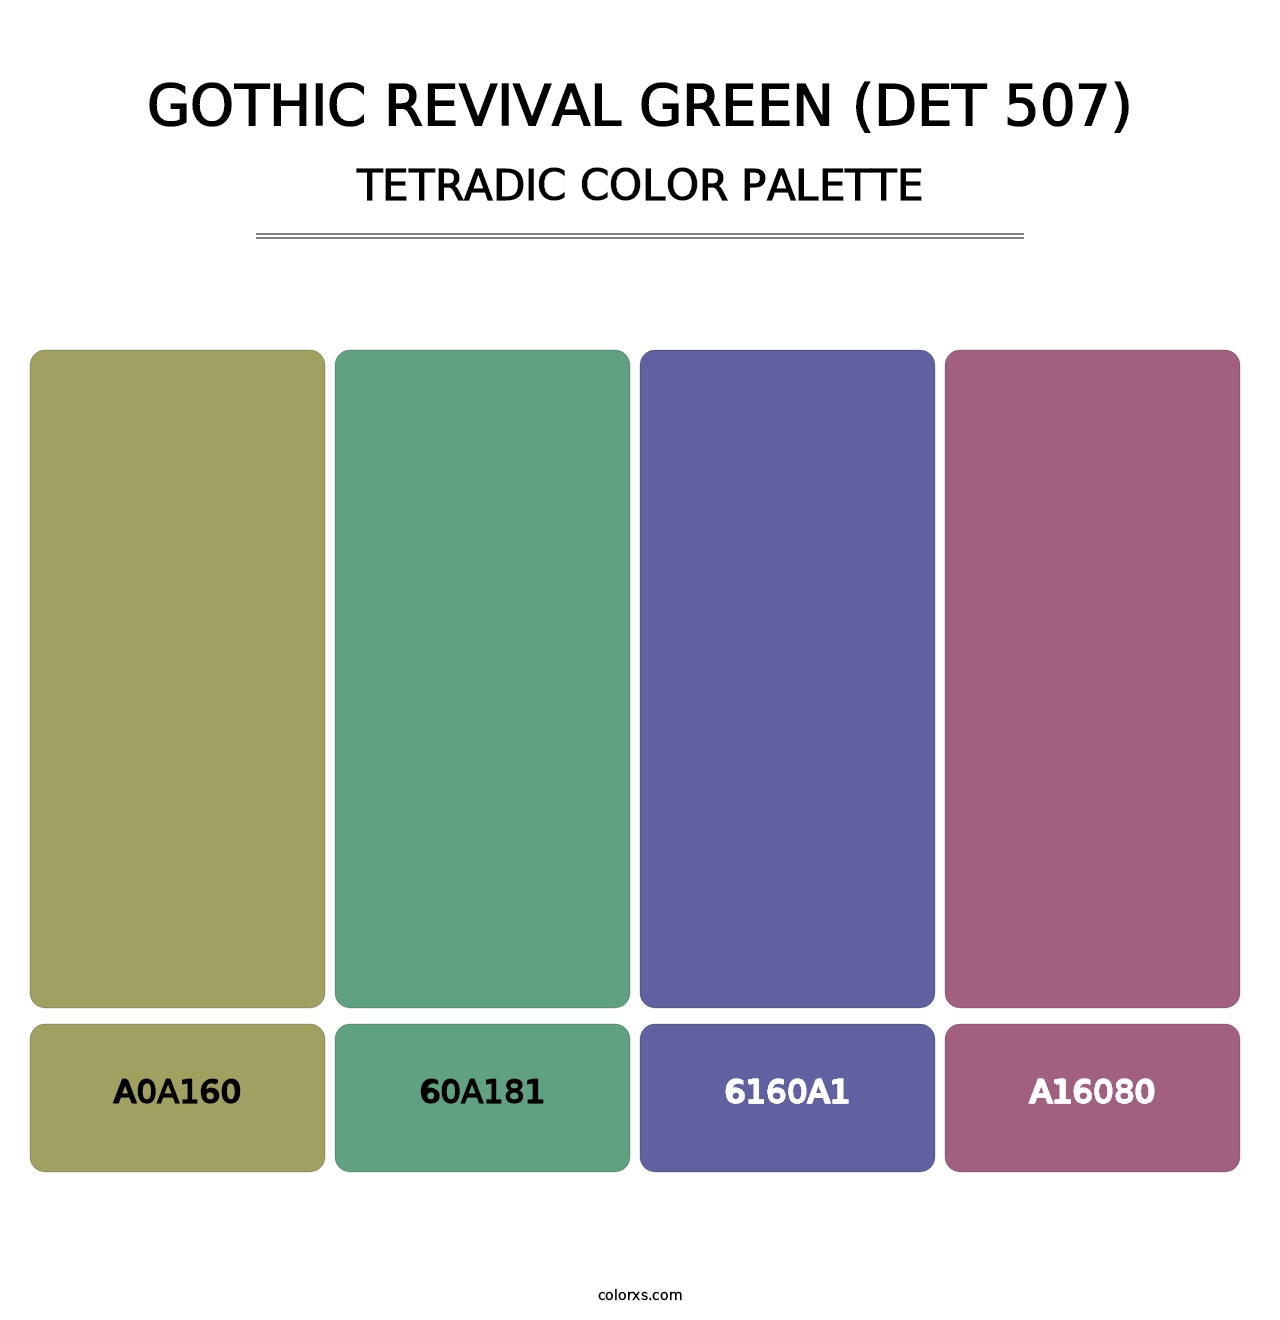 Gothic Revival Green (DET 507) - Tetradic Color Palette